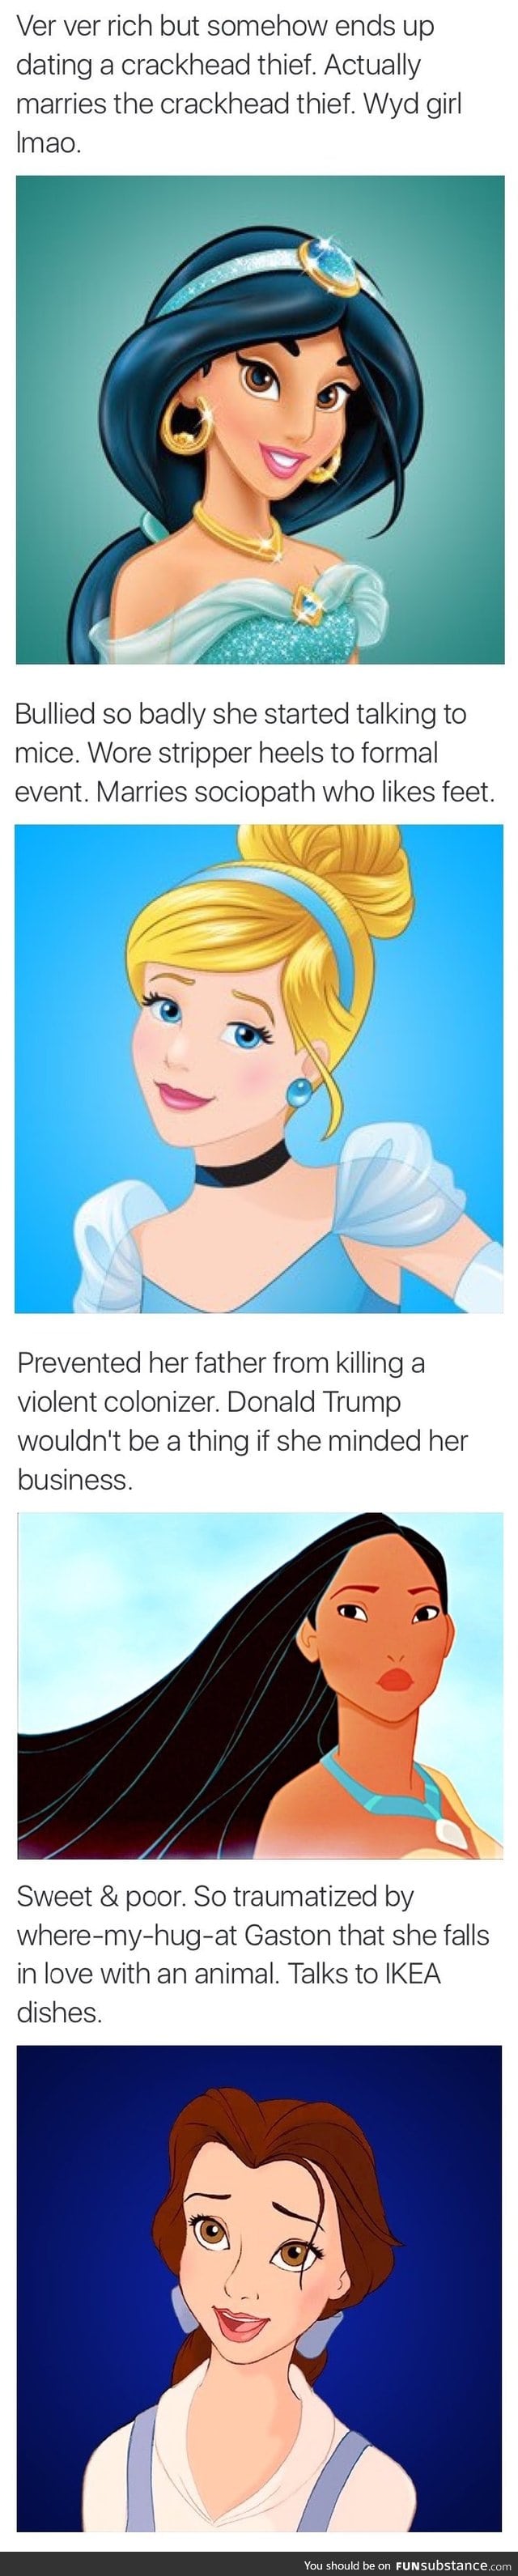 A modern take on the princesses